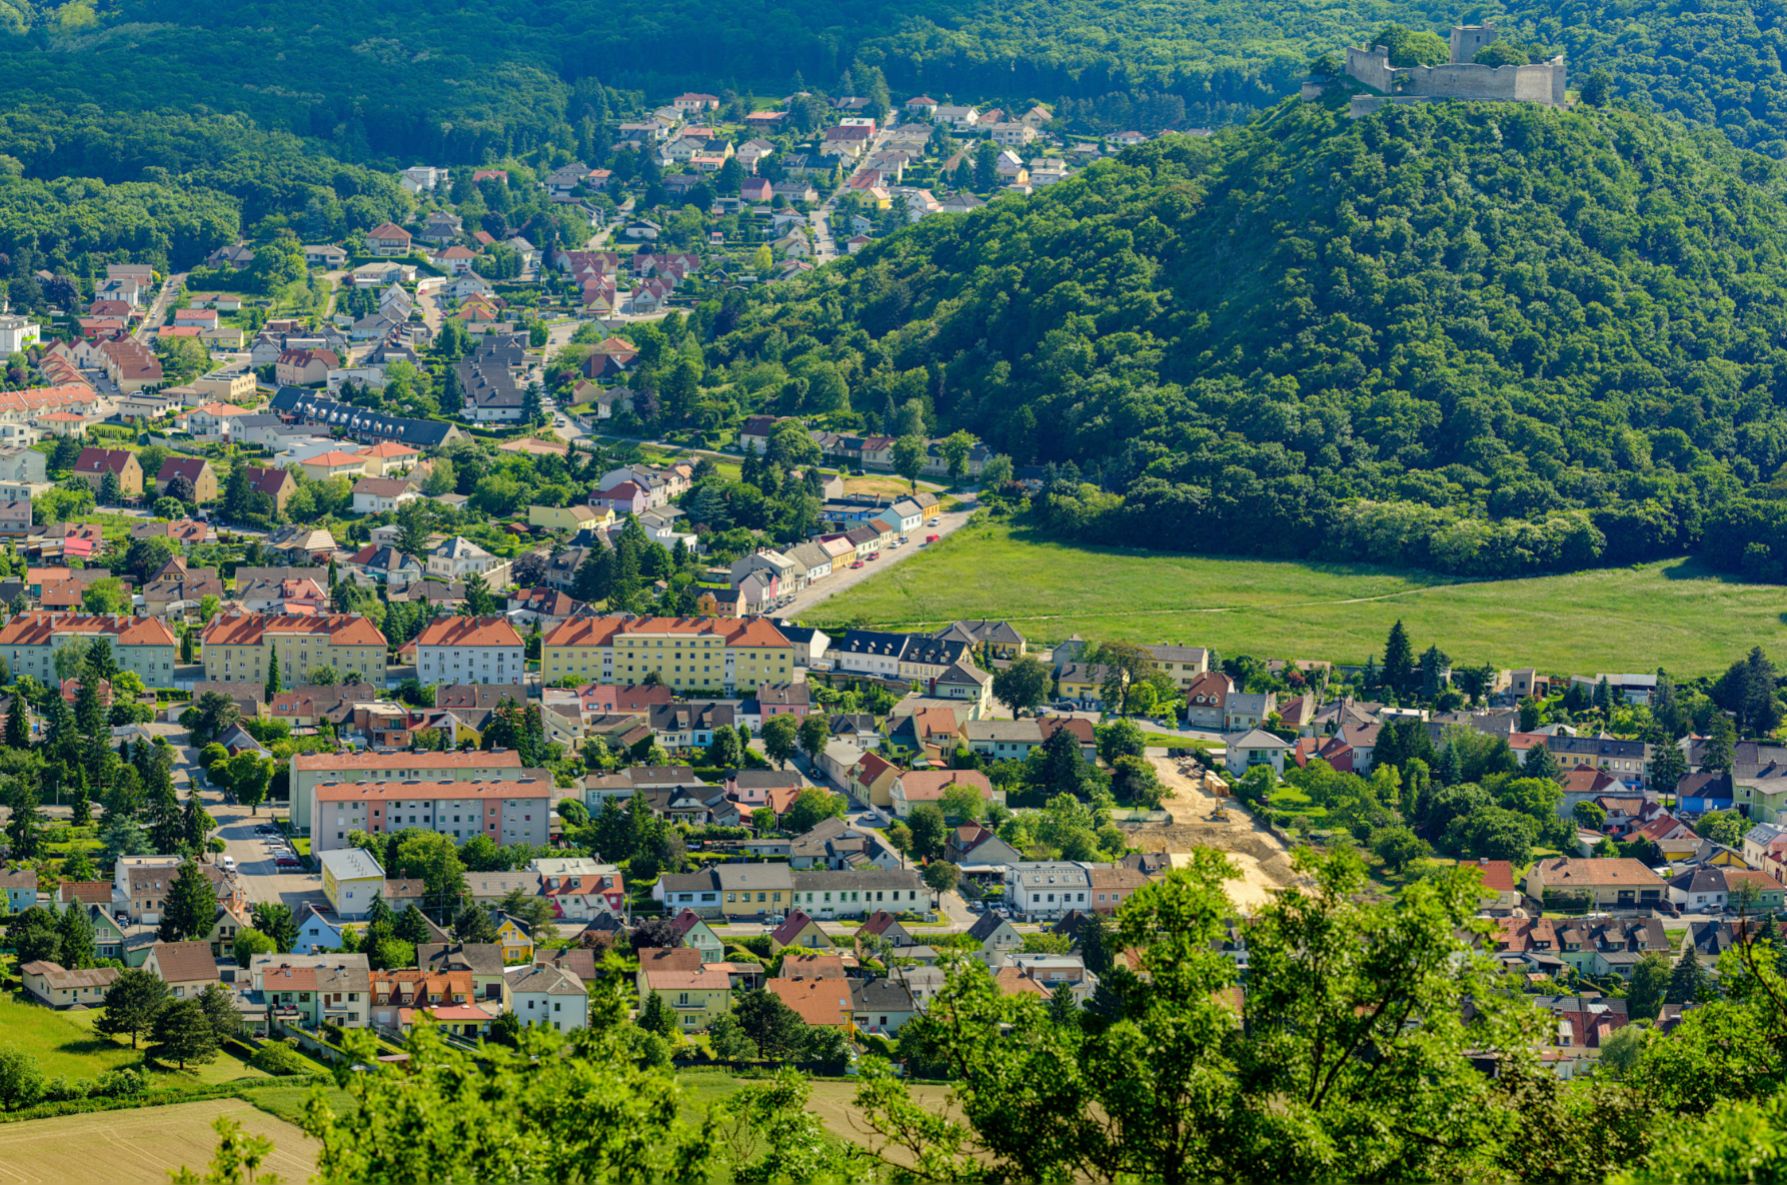 Hainburg z Braunsbergu (Jún 2021)